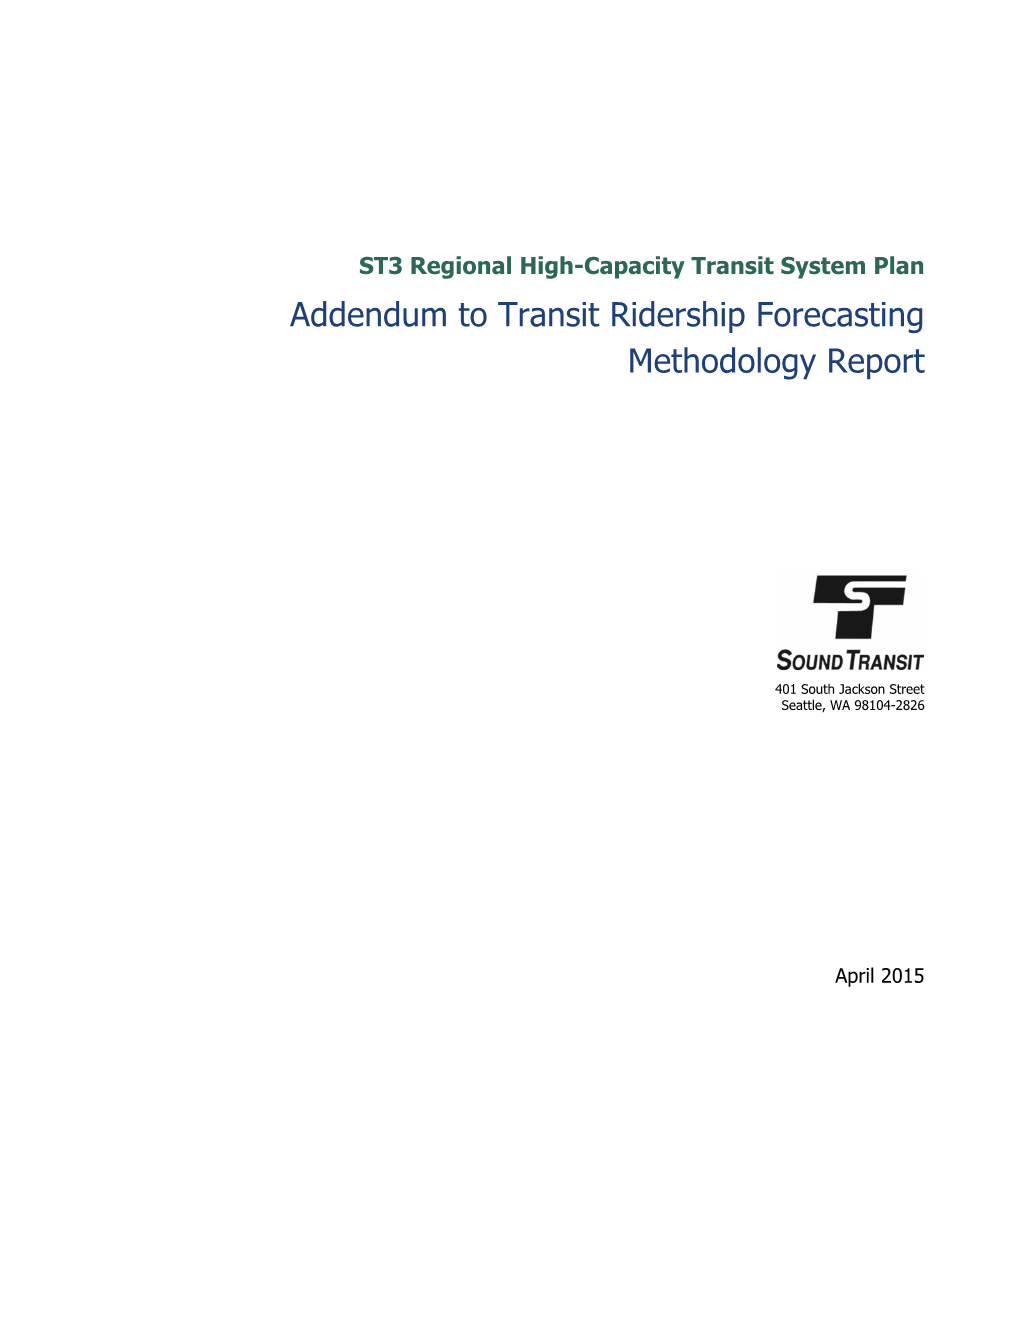 ST3 Addendum to Transit Ridership Forecasting Methodology Report